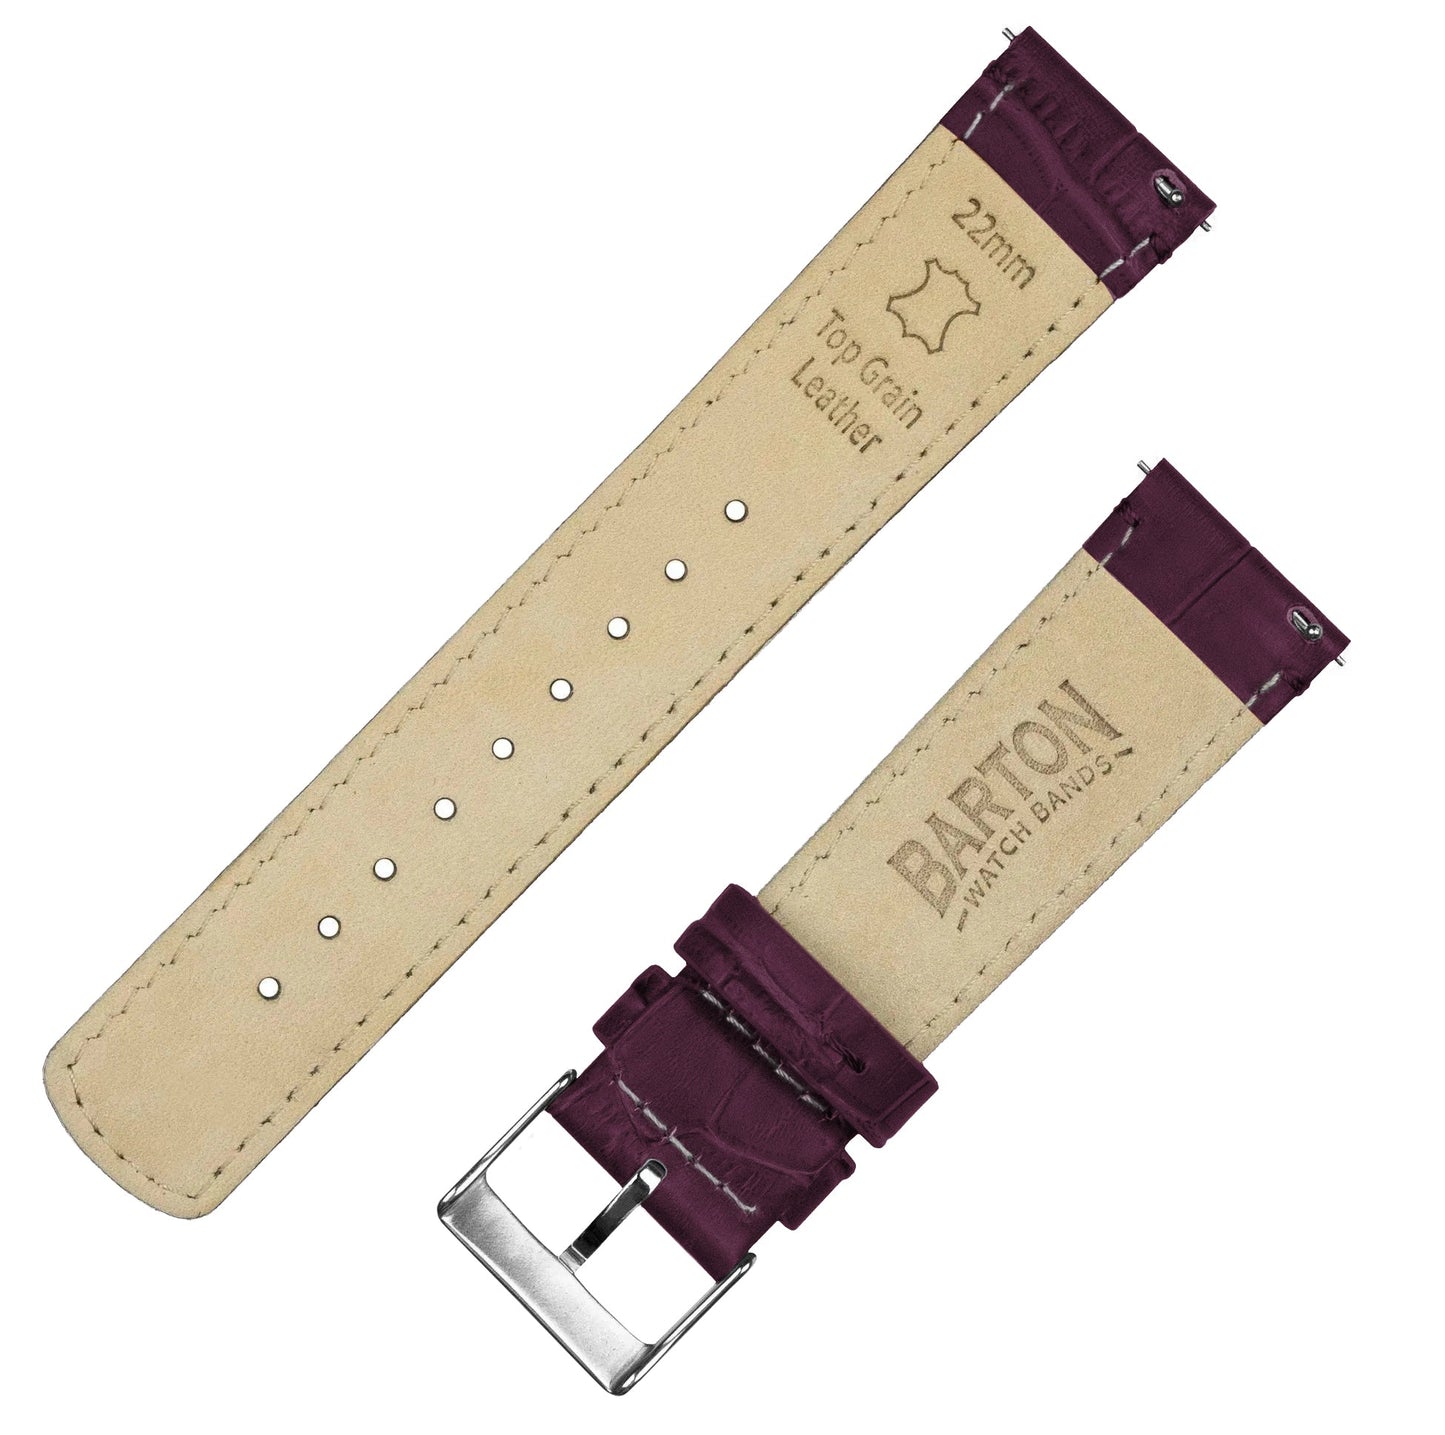 Samsung Galaxy Watch | Merlot Alligator Grain Leather - Barton Watch Bands